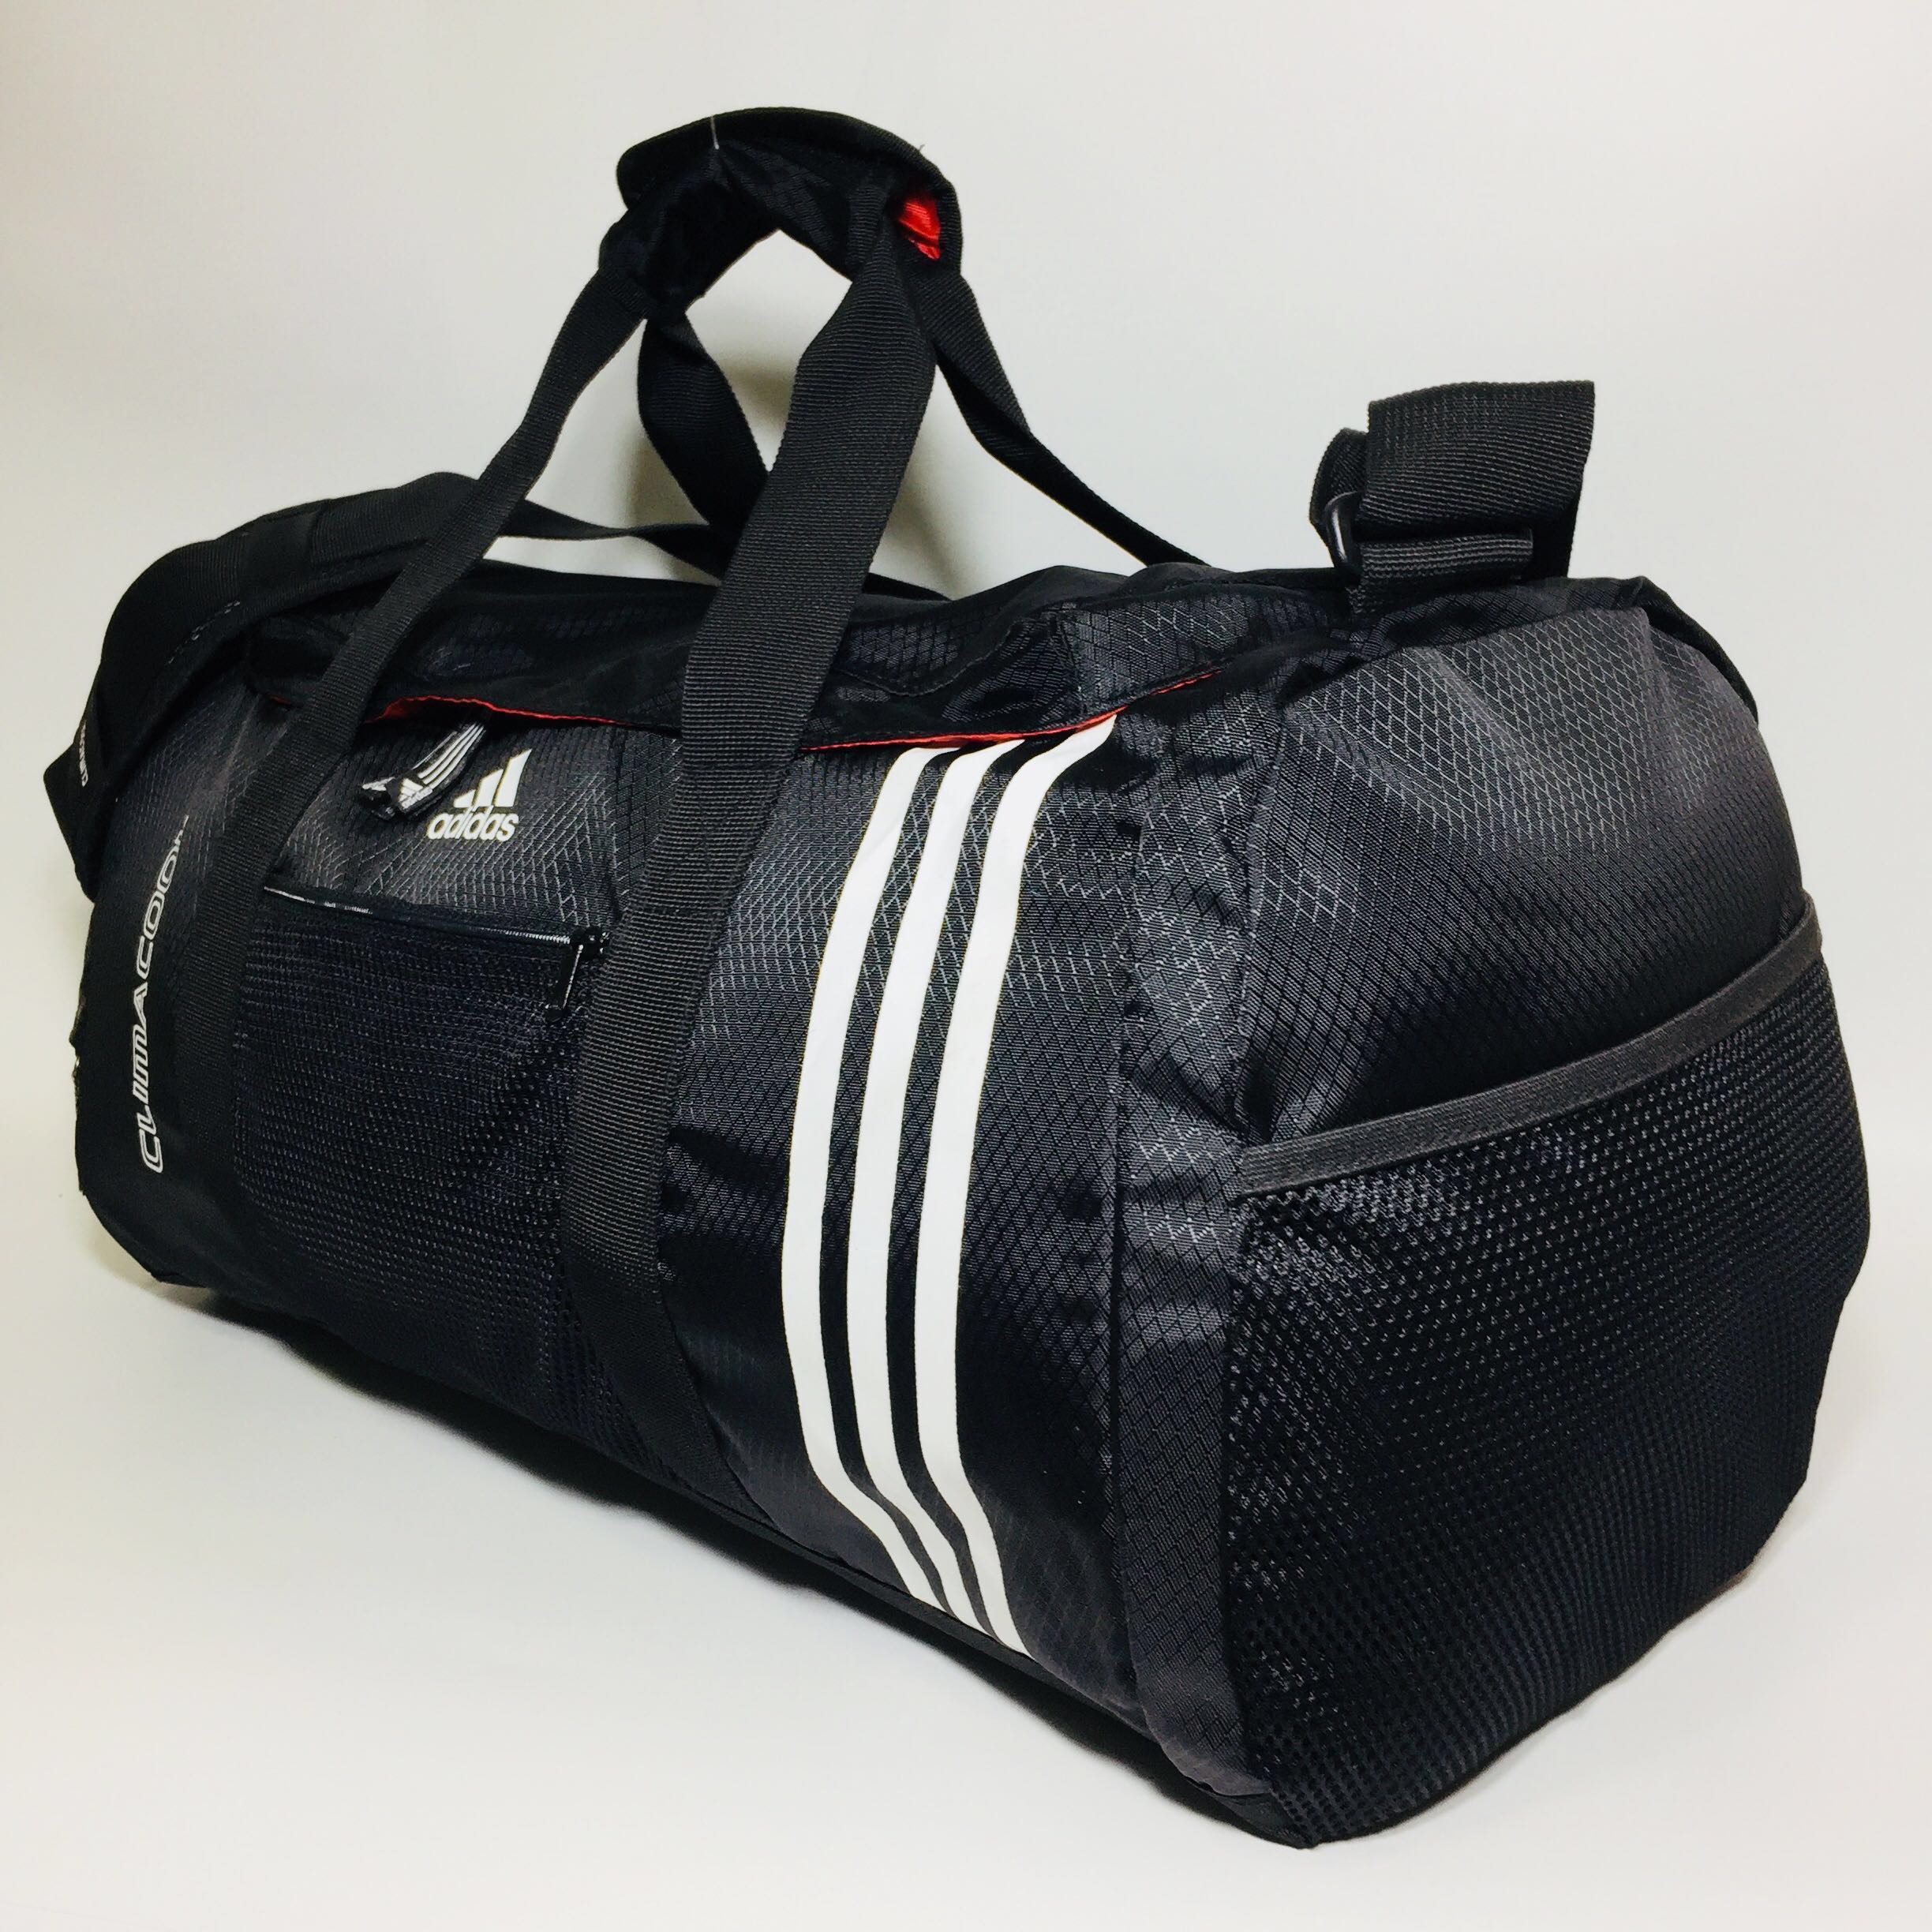 Adidas Climacool Duffle Bag, Sports 